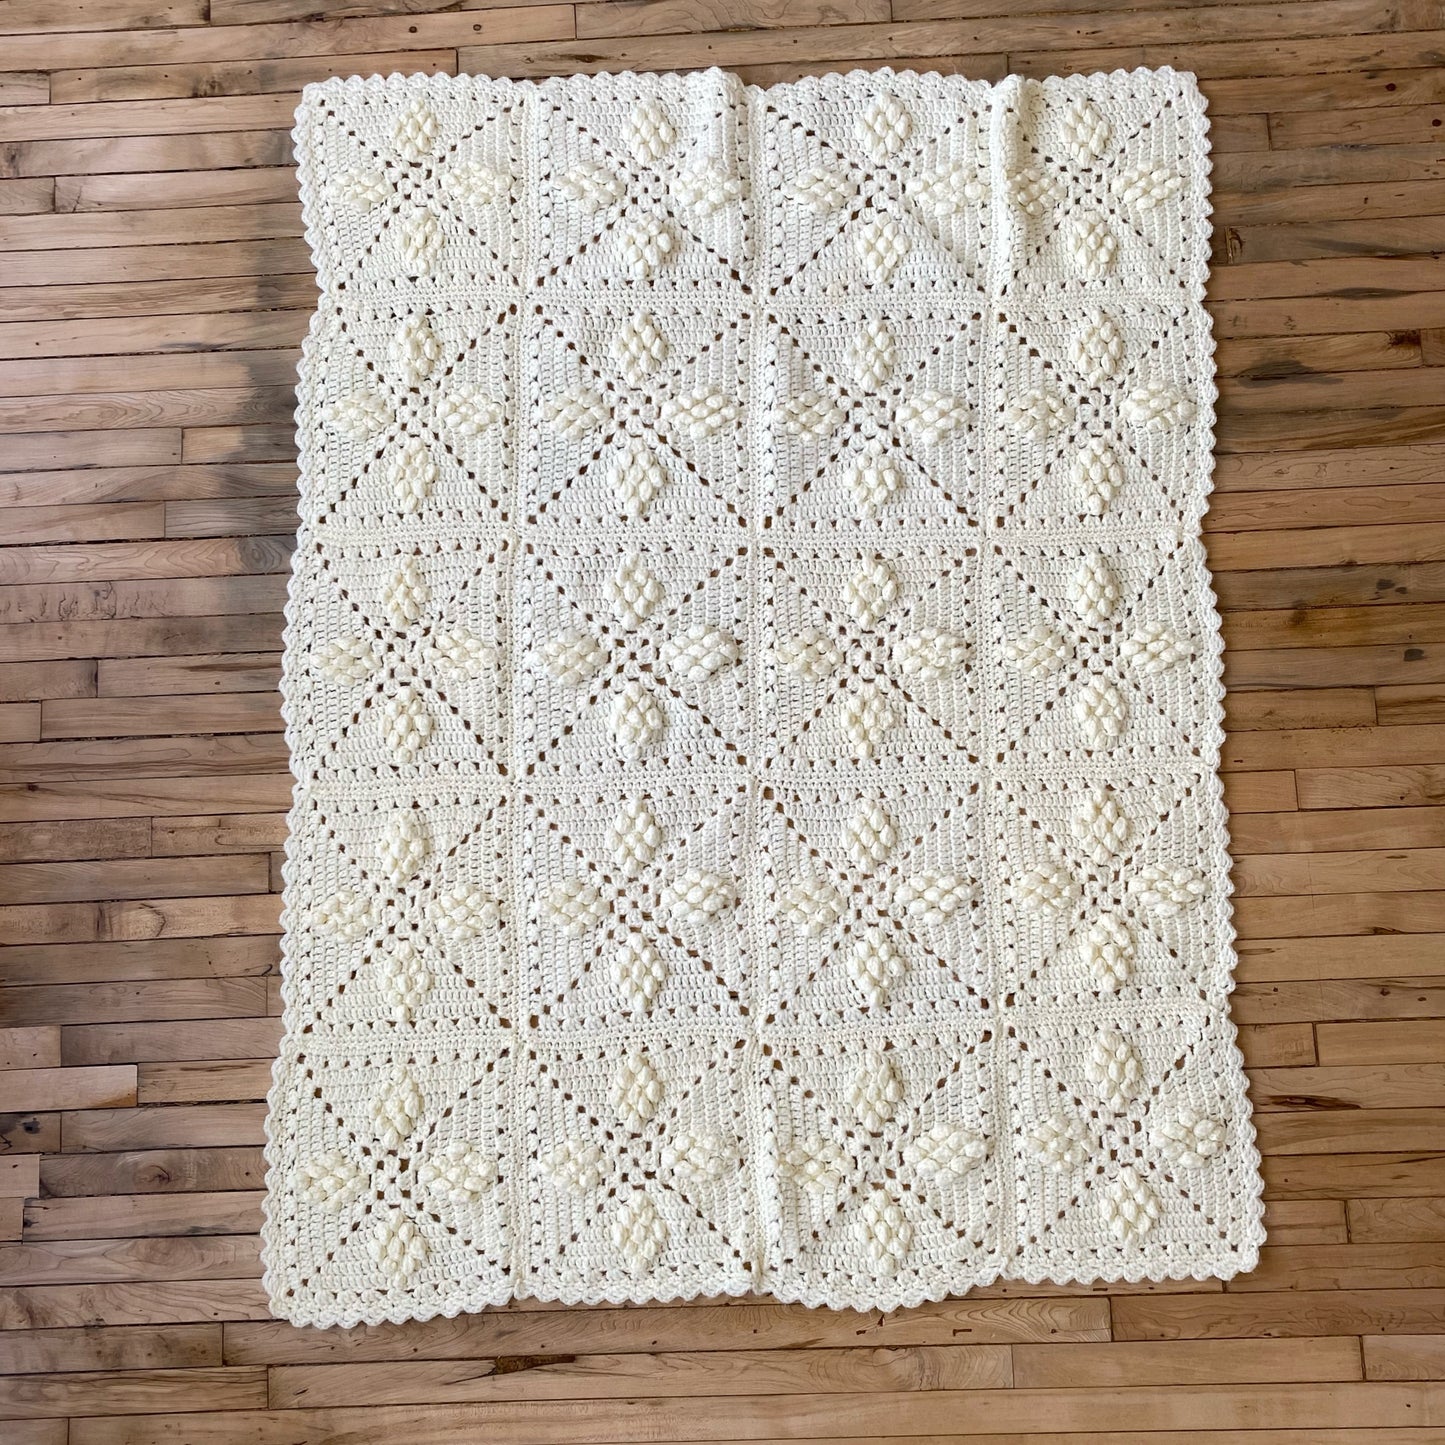 Vintage Hand-Stitched Baby Blanket, Ivory